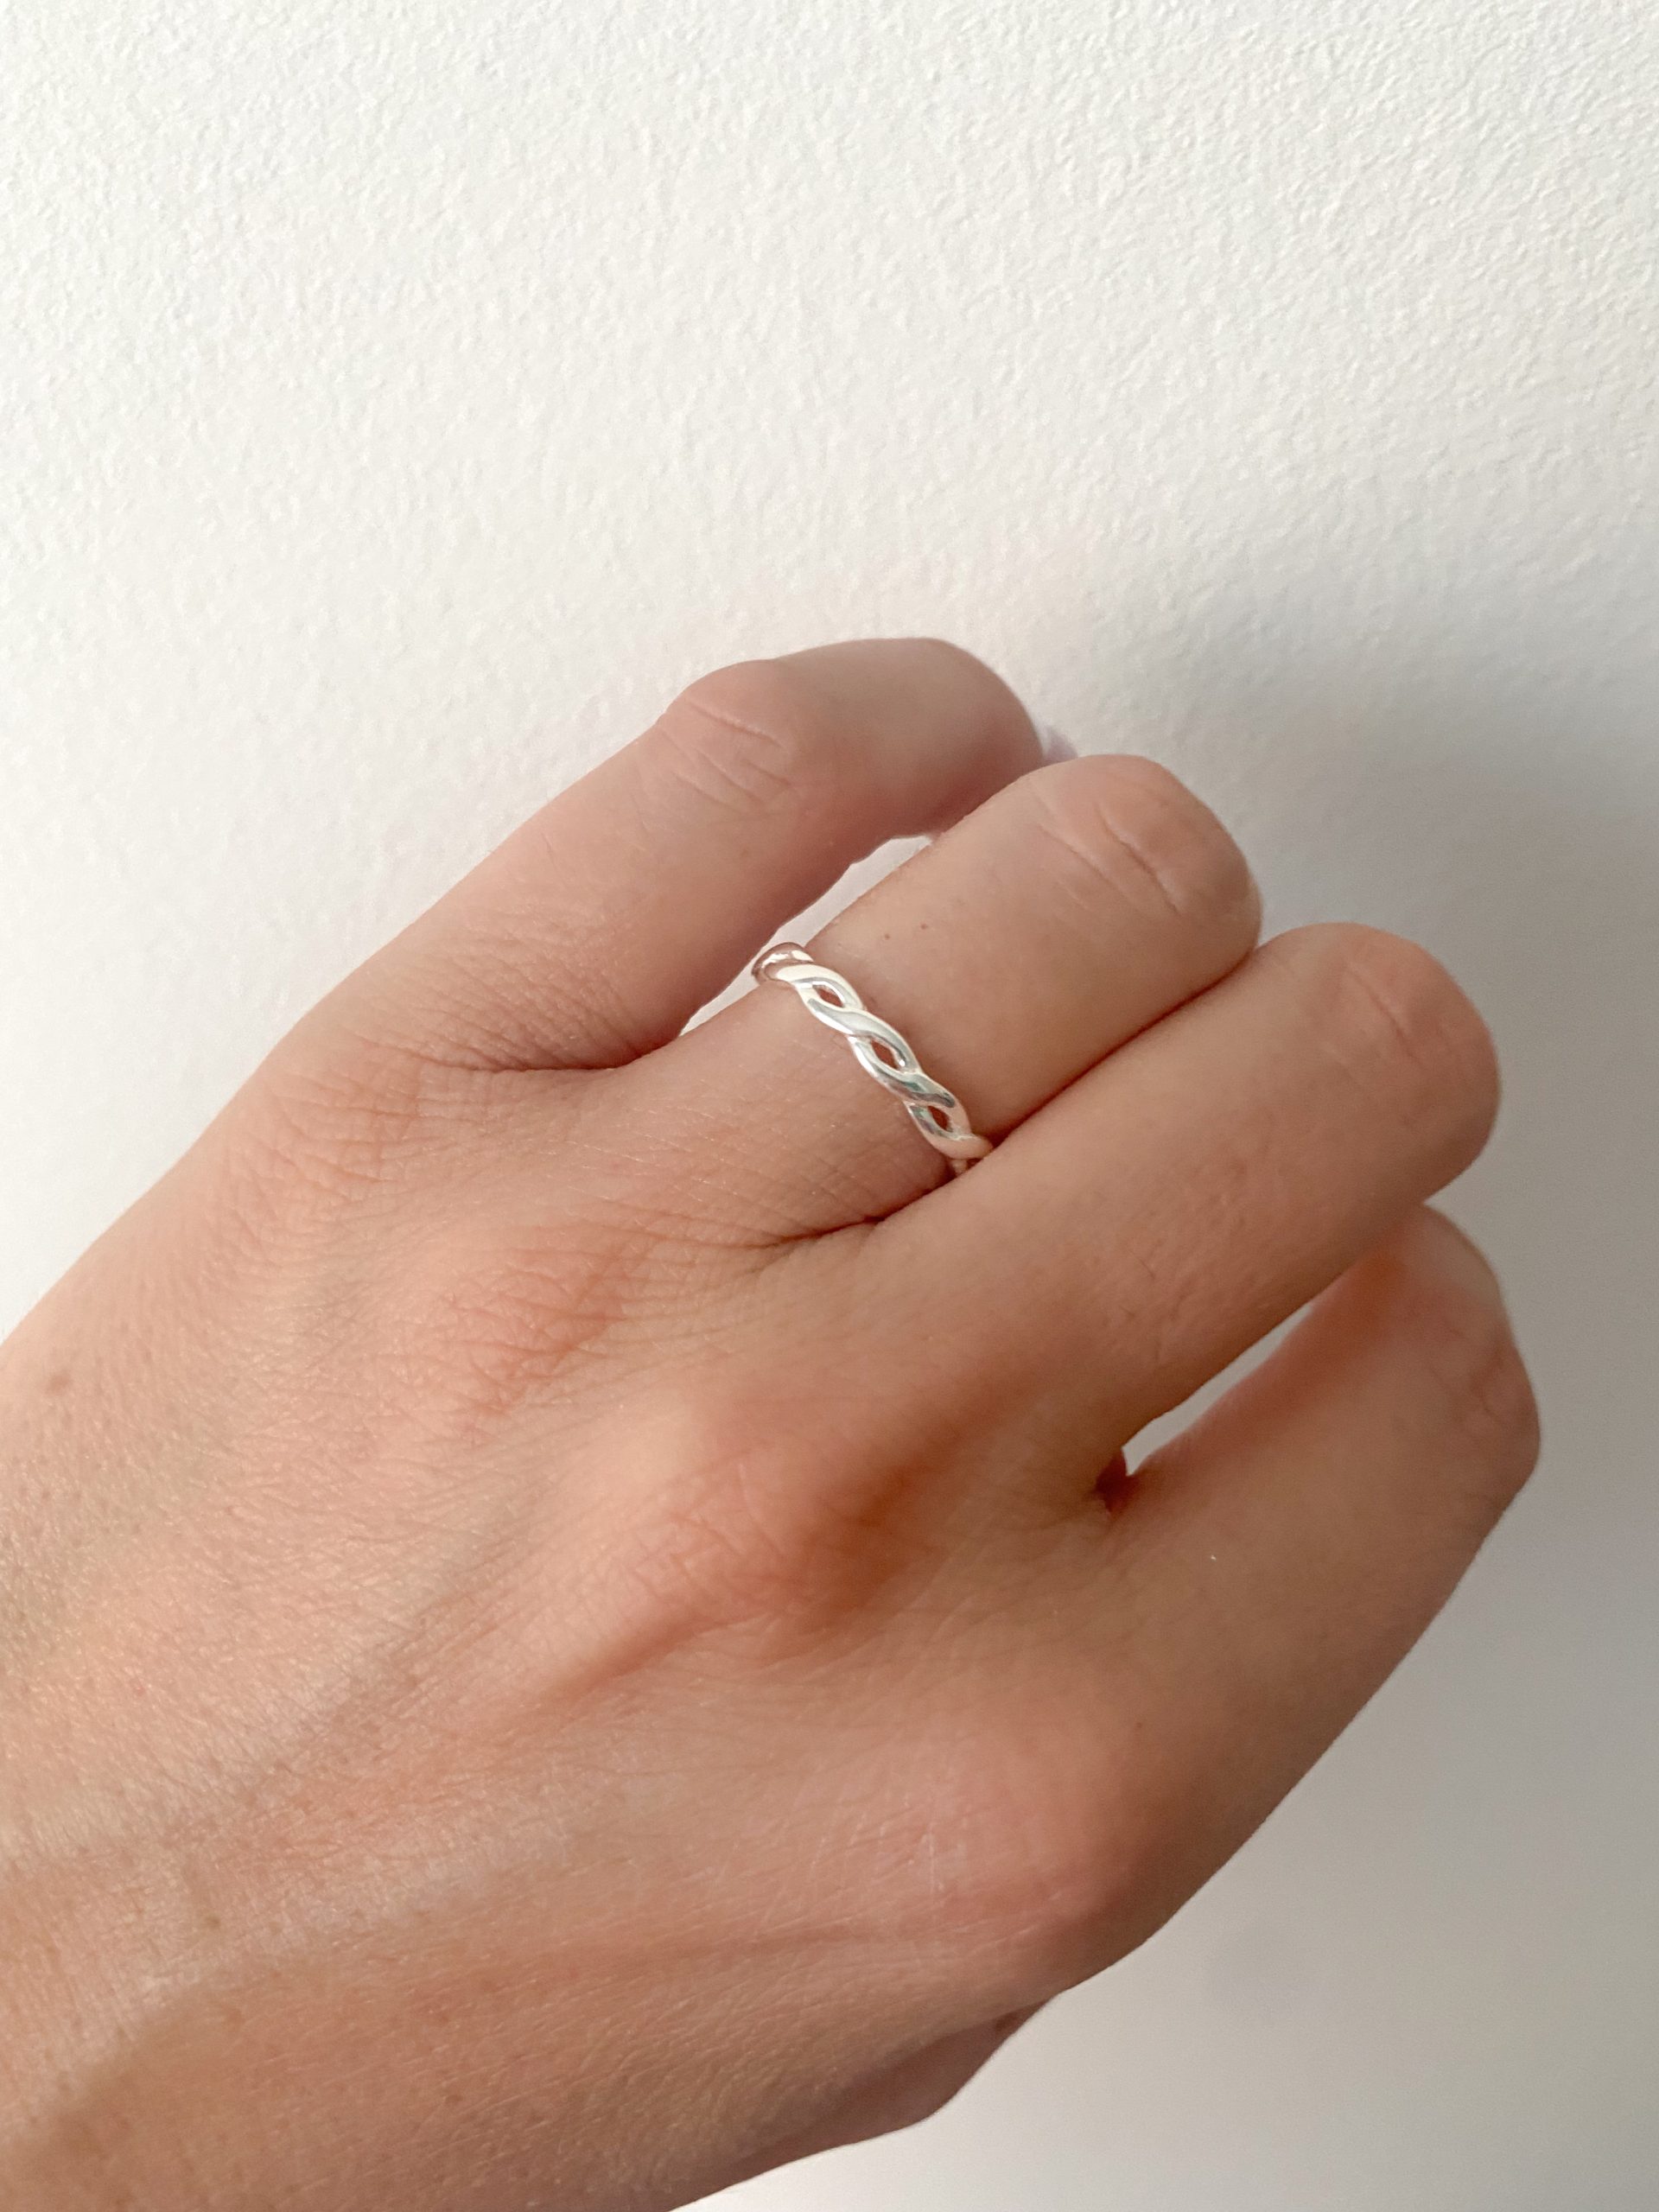 Sterling silver flat braided wedding ring 1.8mm